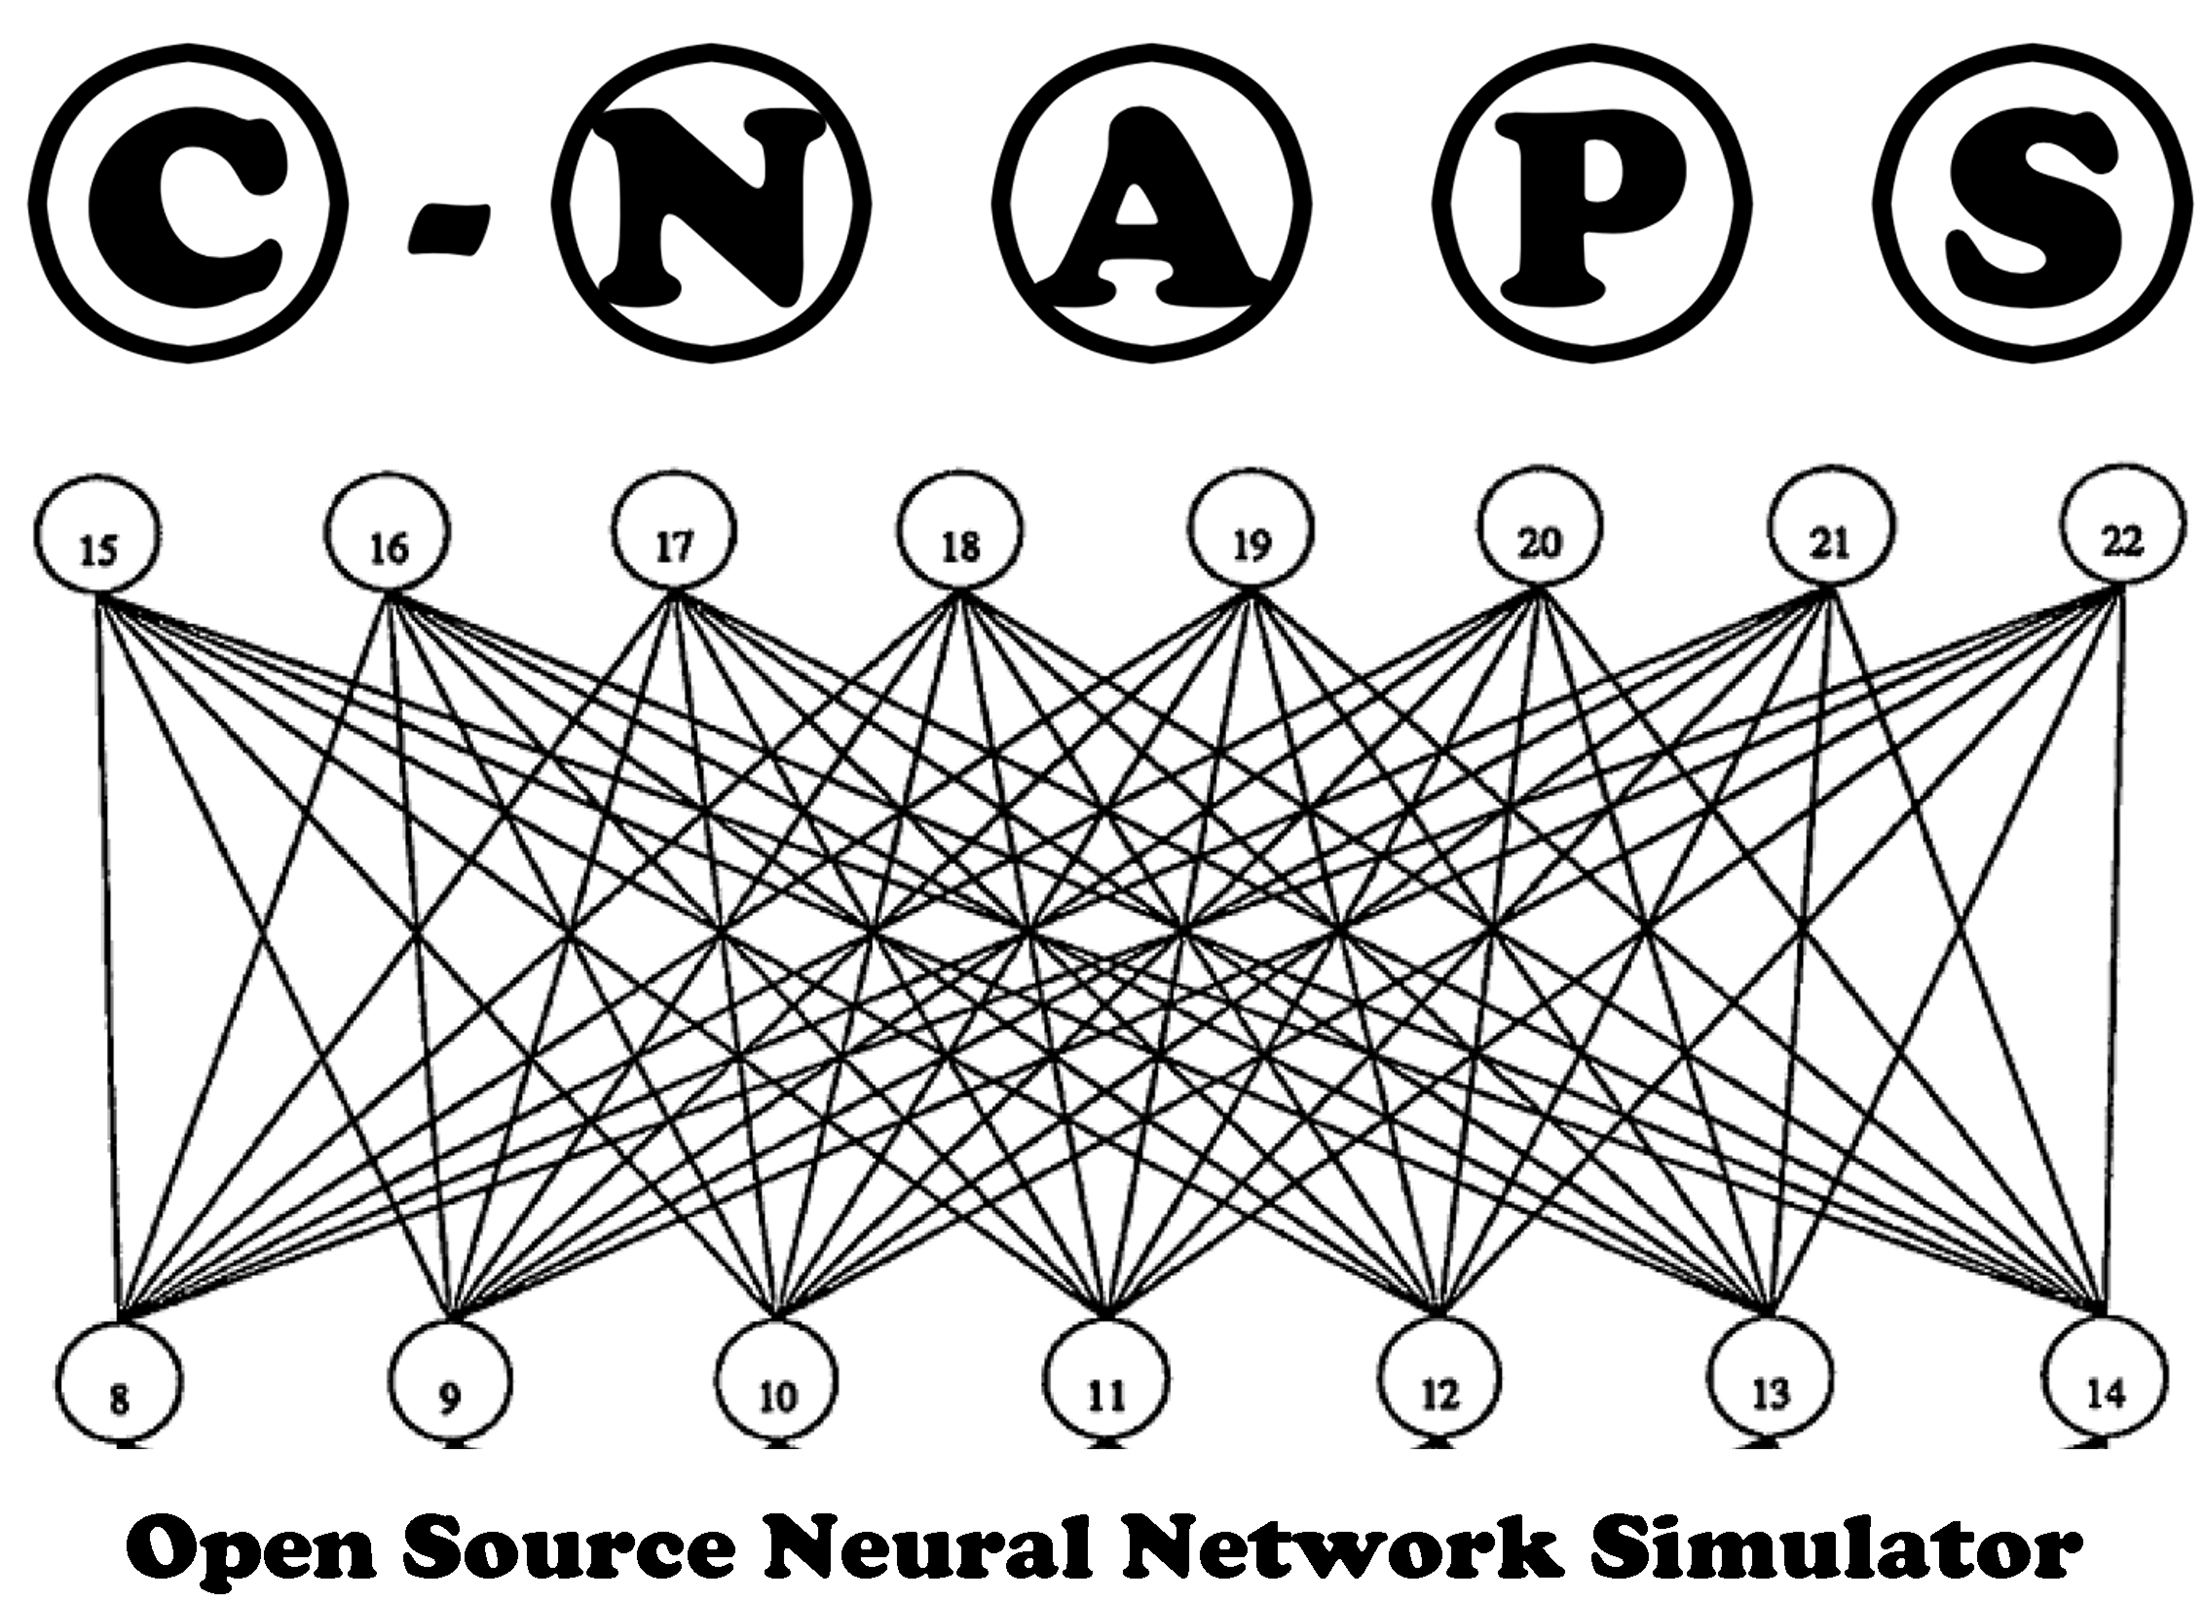 C-NAPS Open Source Neural Network Software